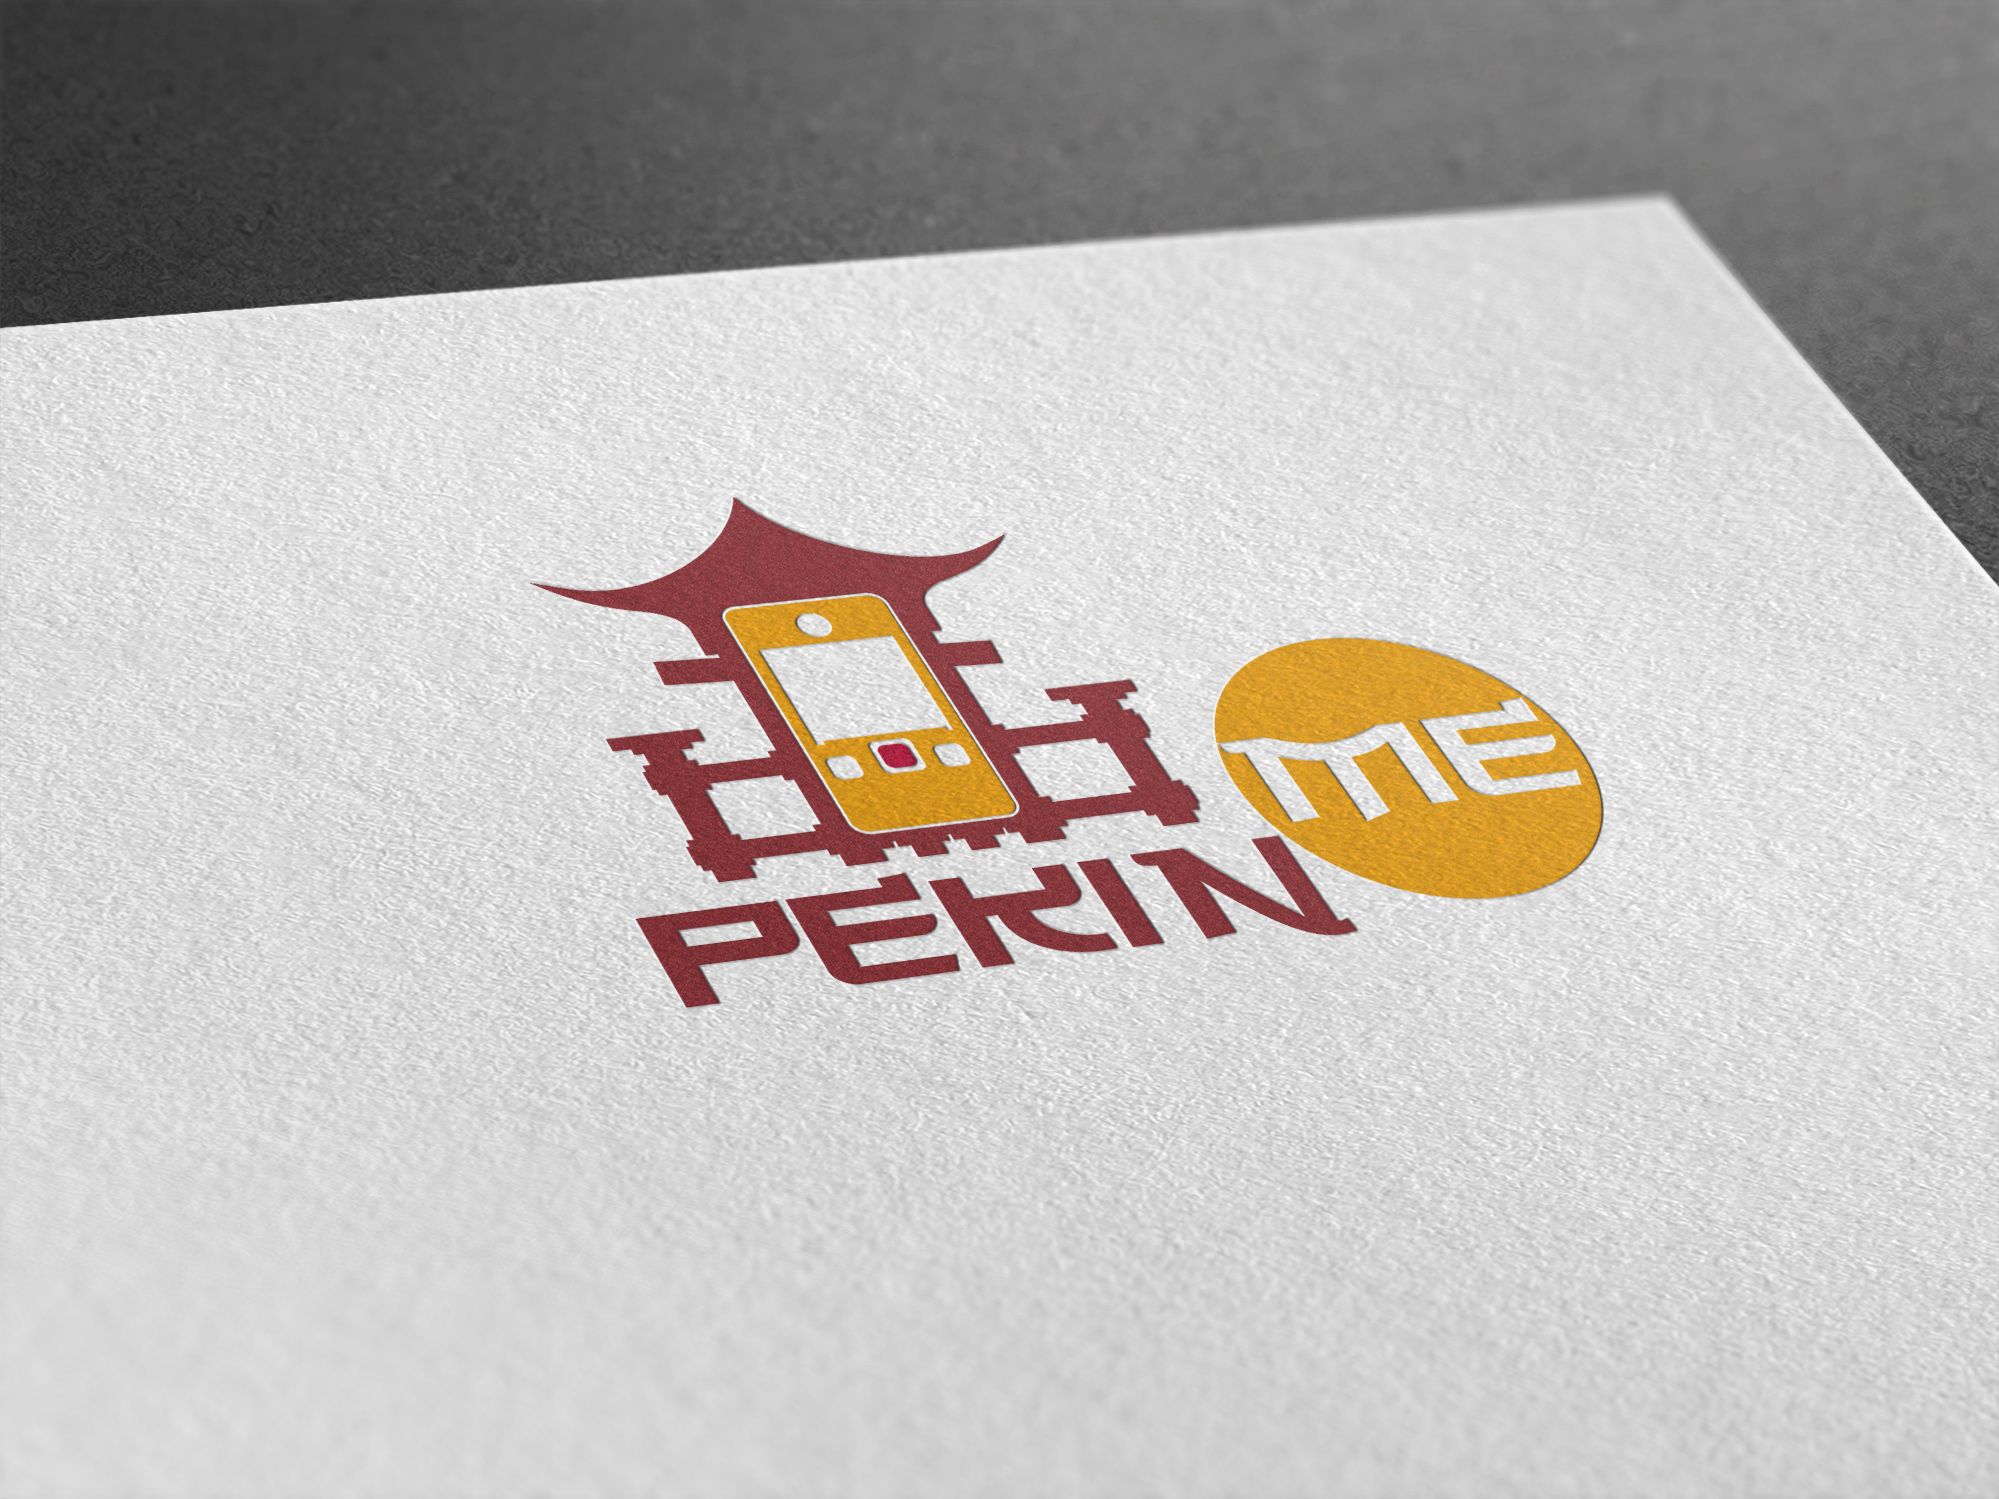 Логотип для компании pekin.me - дизайнер U4po4mak